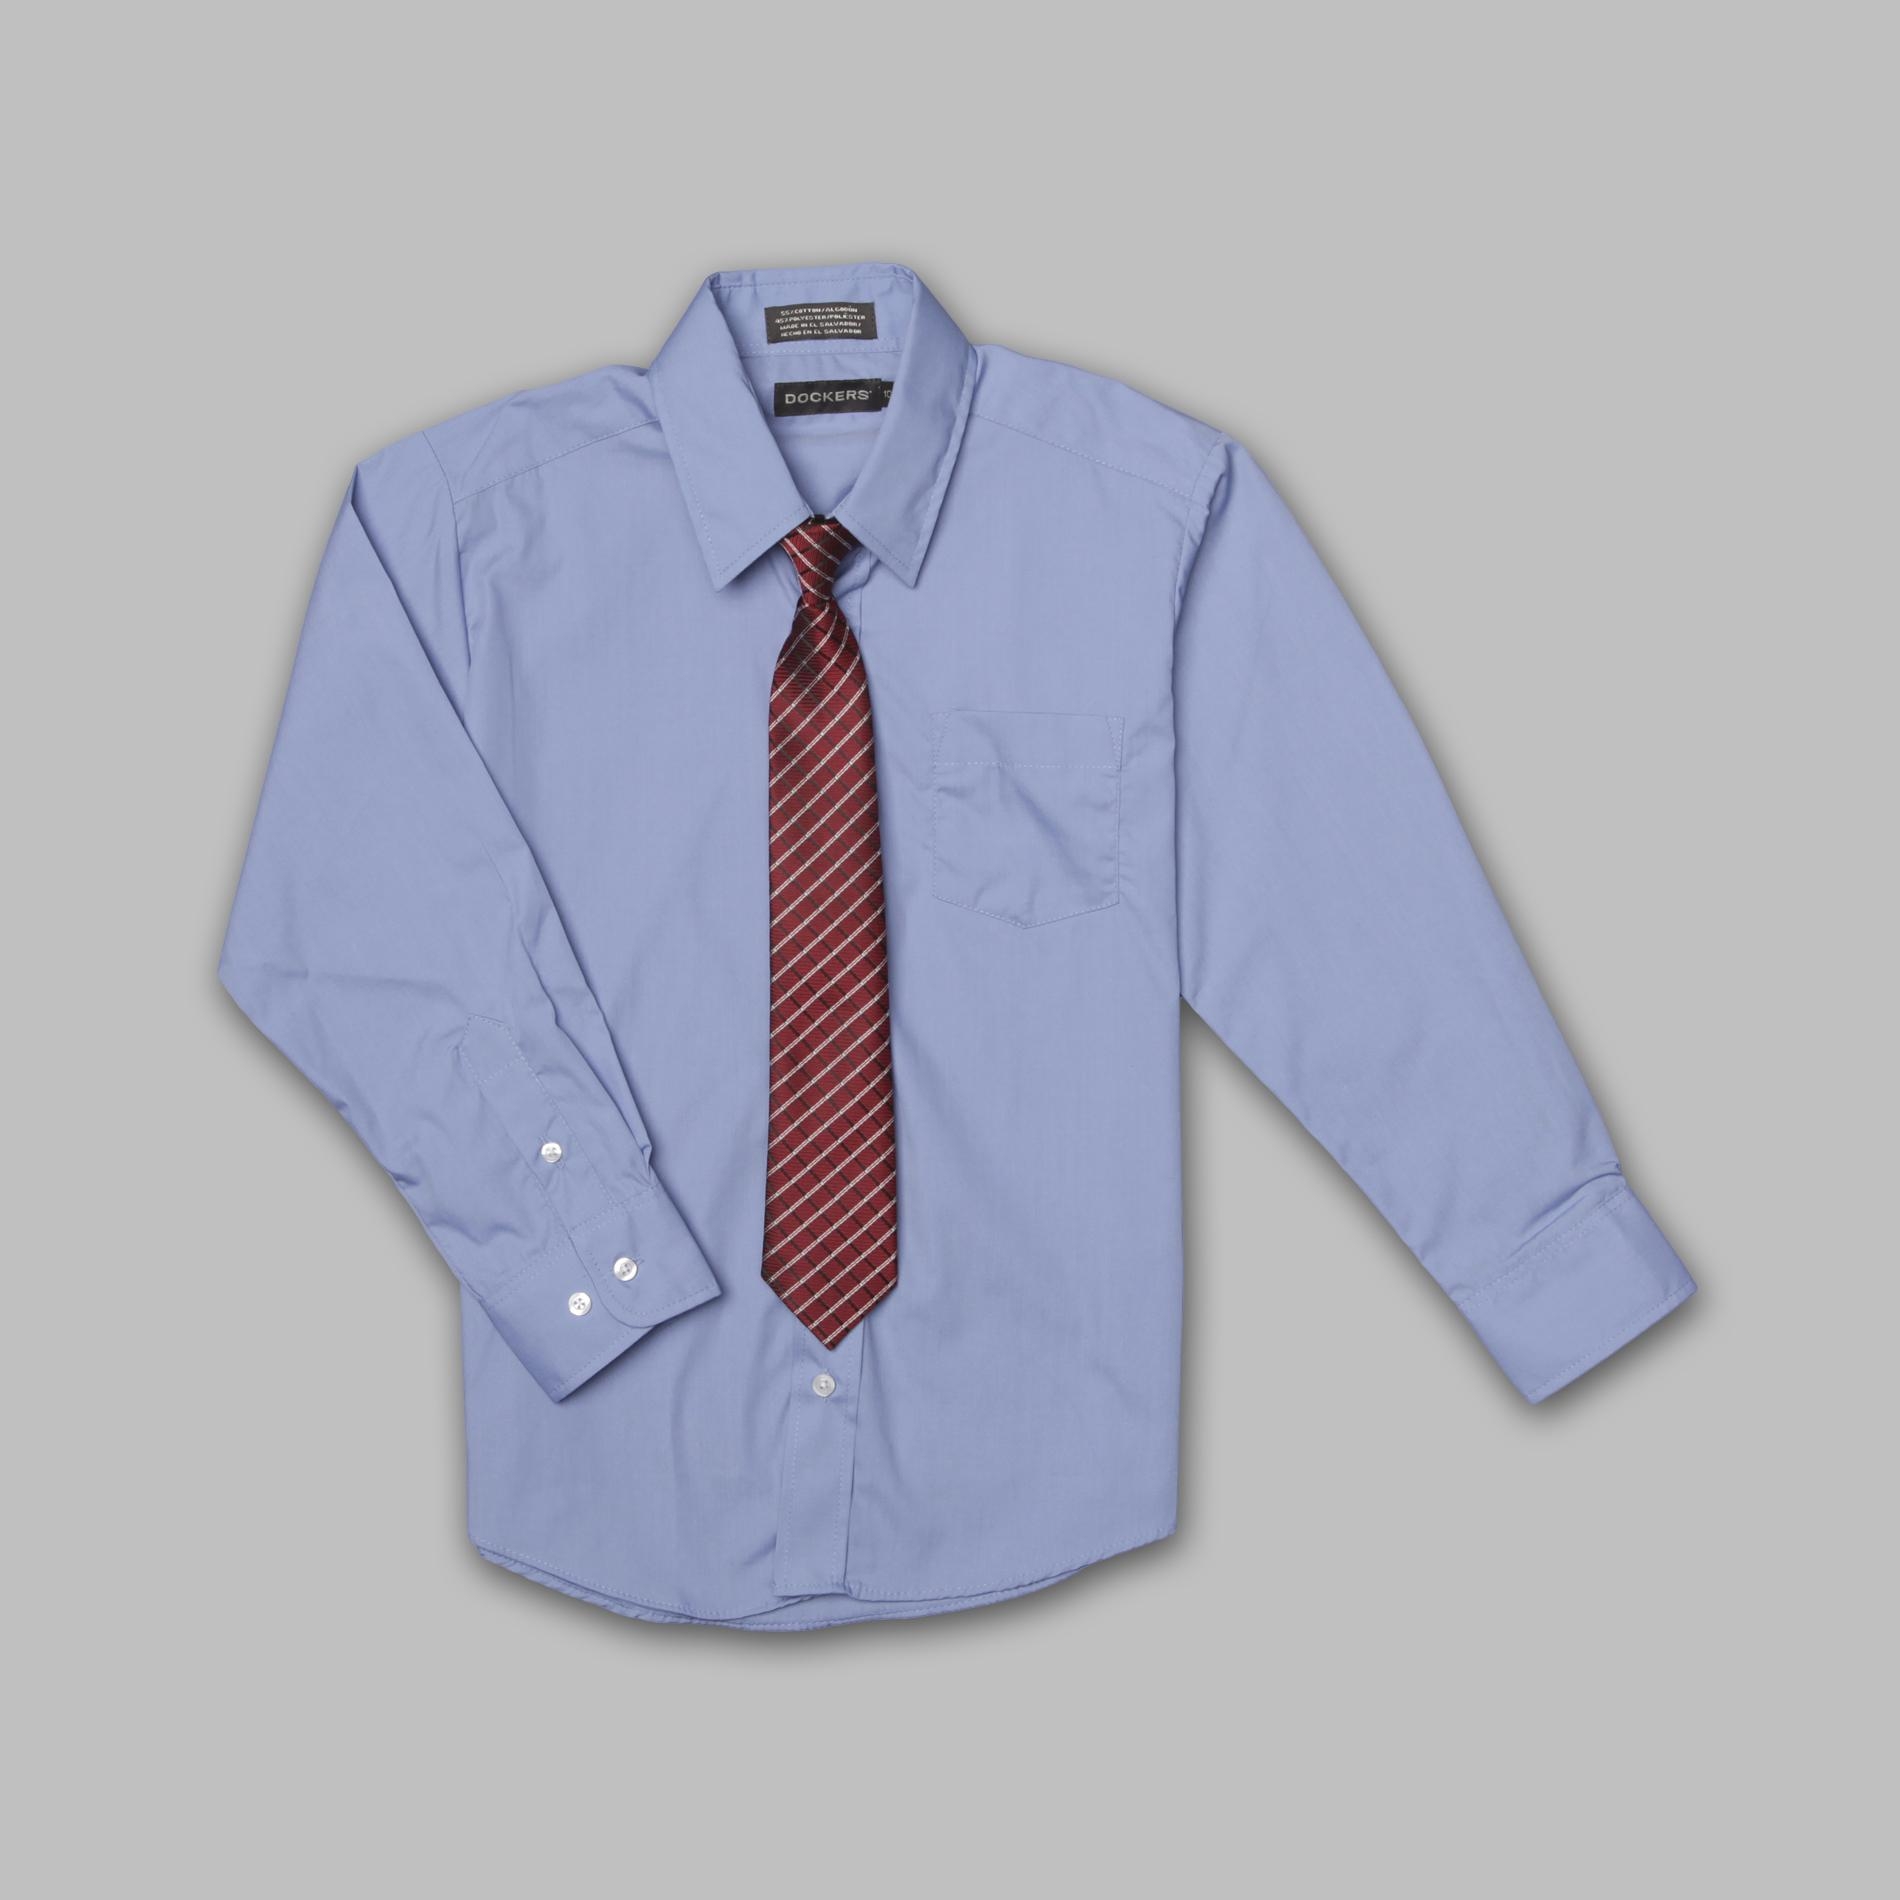 Dockers Boys' 2 Pc. Dress Shirt and Tie Set